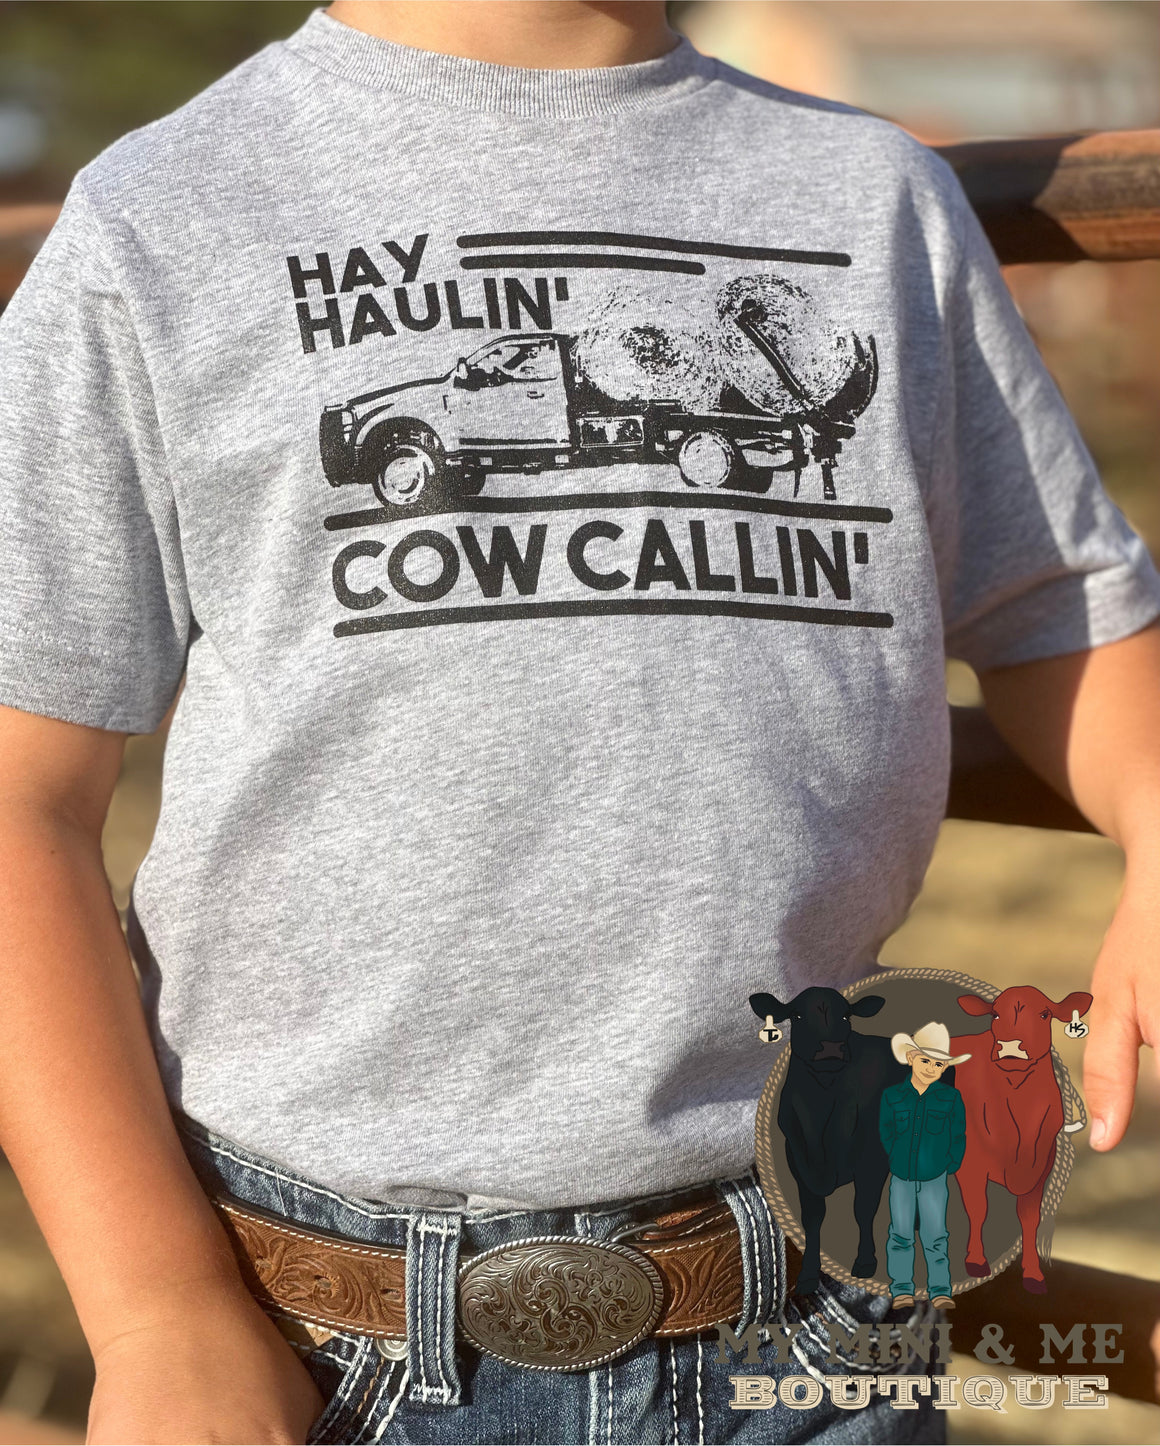 Hay Haulin Cow Callin